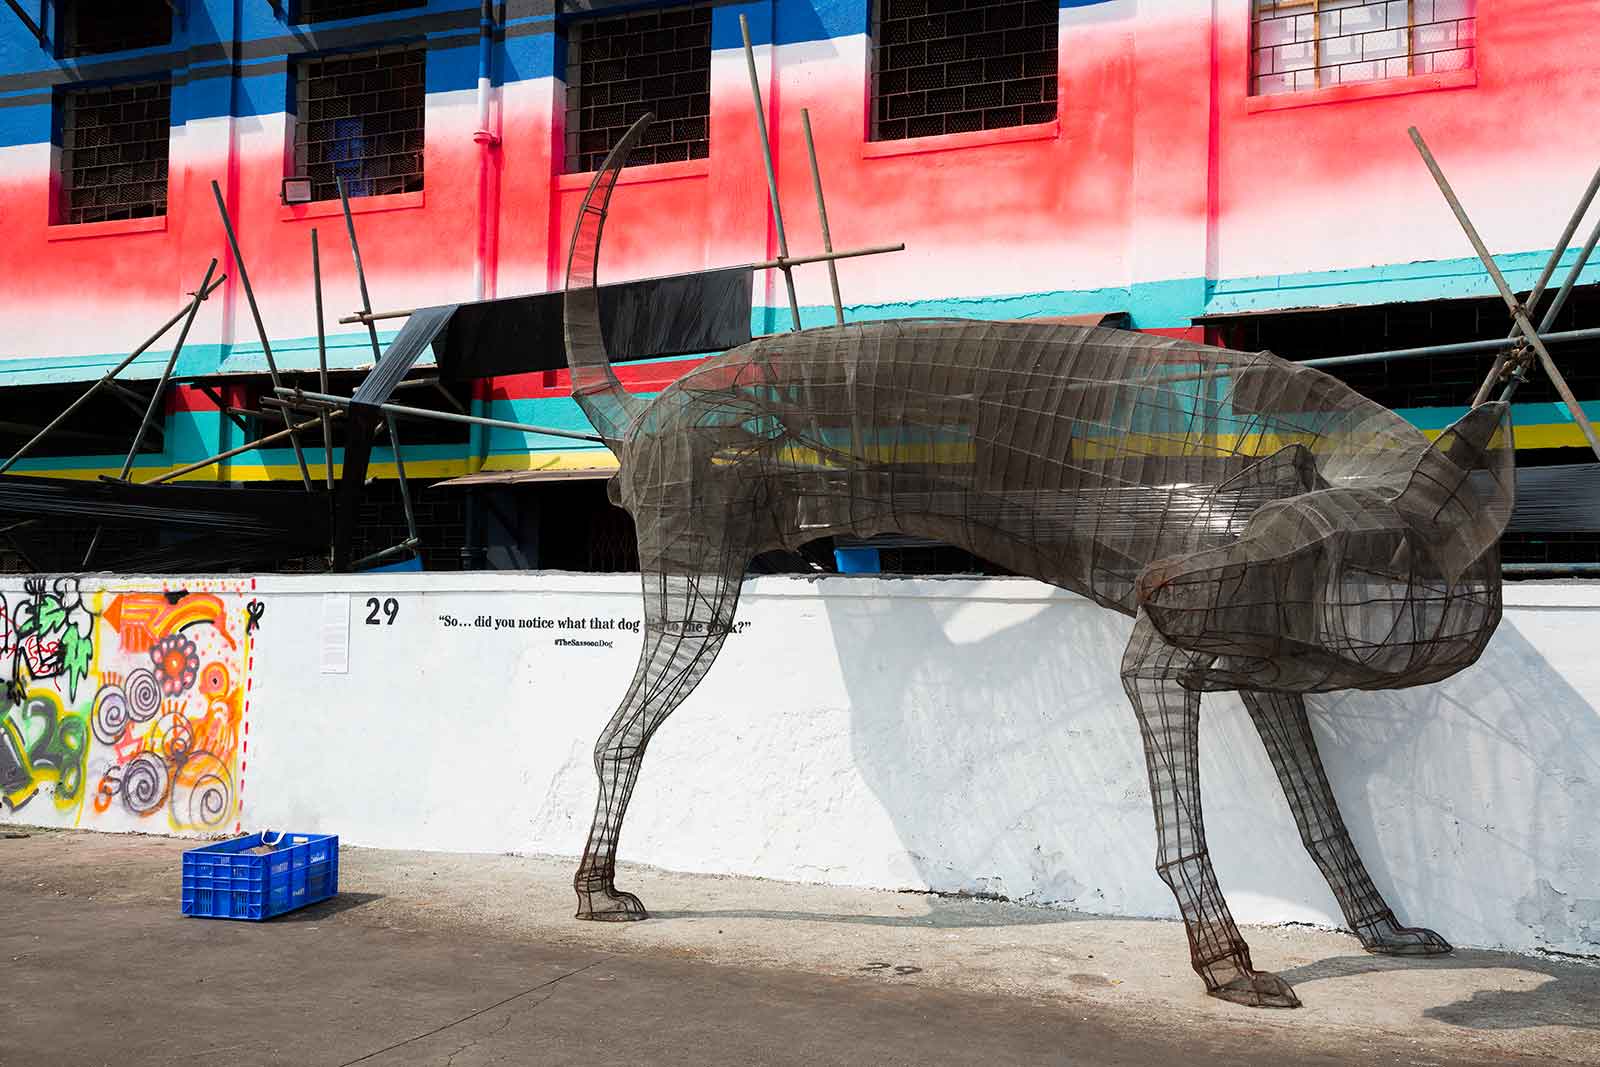 The Sassoon Dog is hard to miss when walking along the Sassoon Docks in Mumbai.